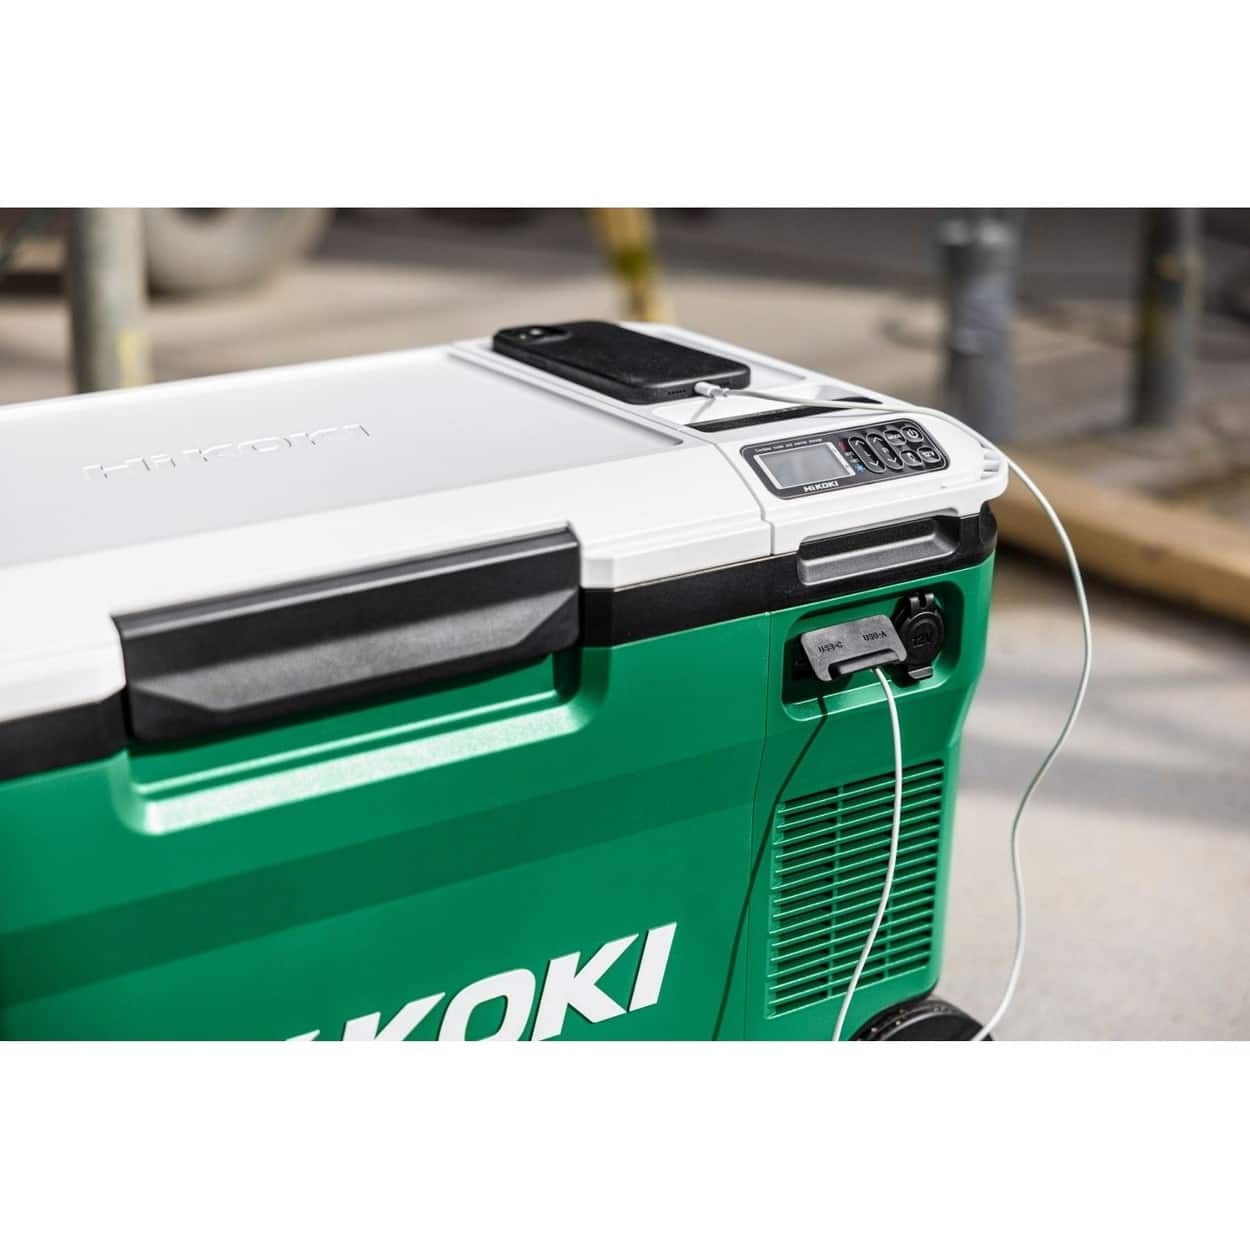 Hikoki UL18DBA Akku Kompressor Kühl- und Wärmebox (Basic)